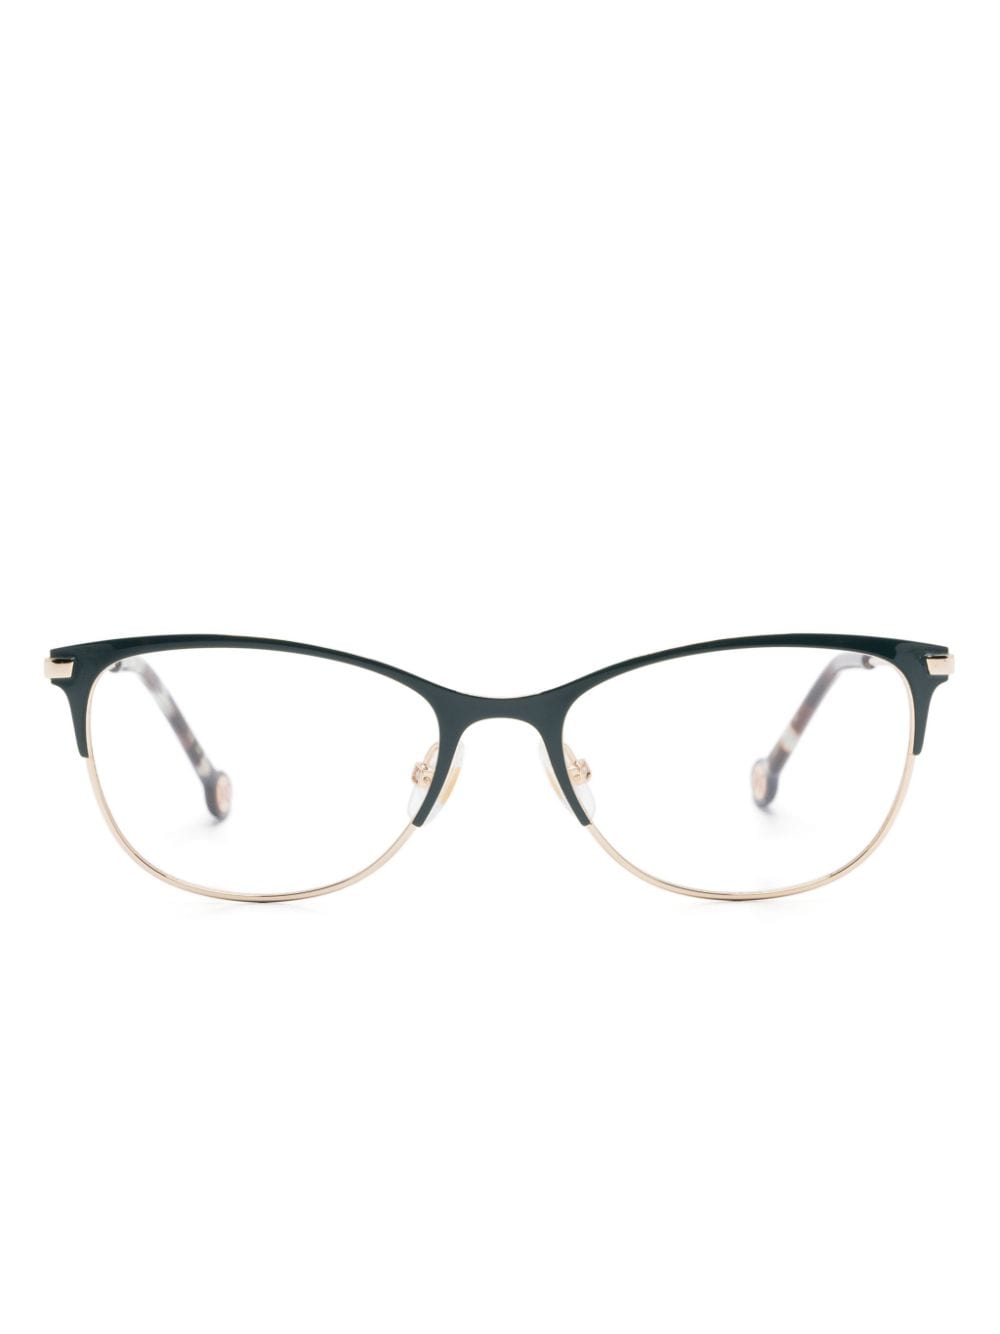 Carolina Herrera butterfly-frame glasses - Green von Carolina Herrera